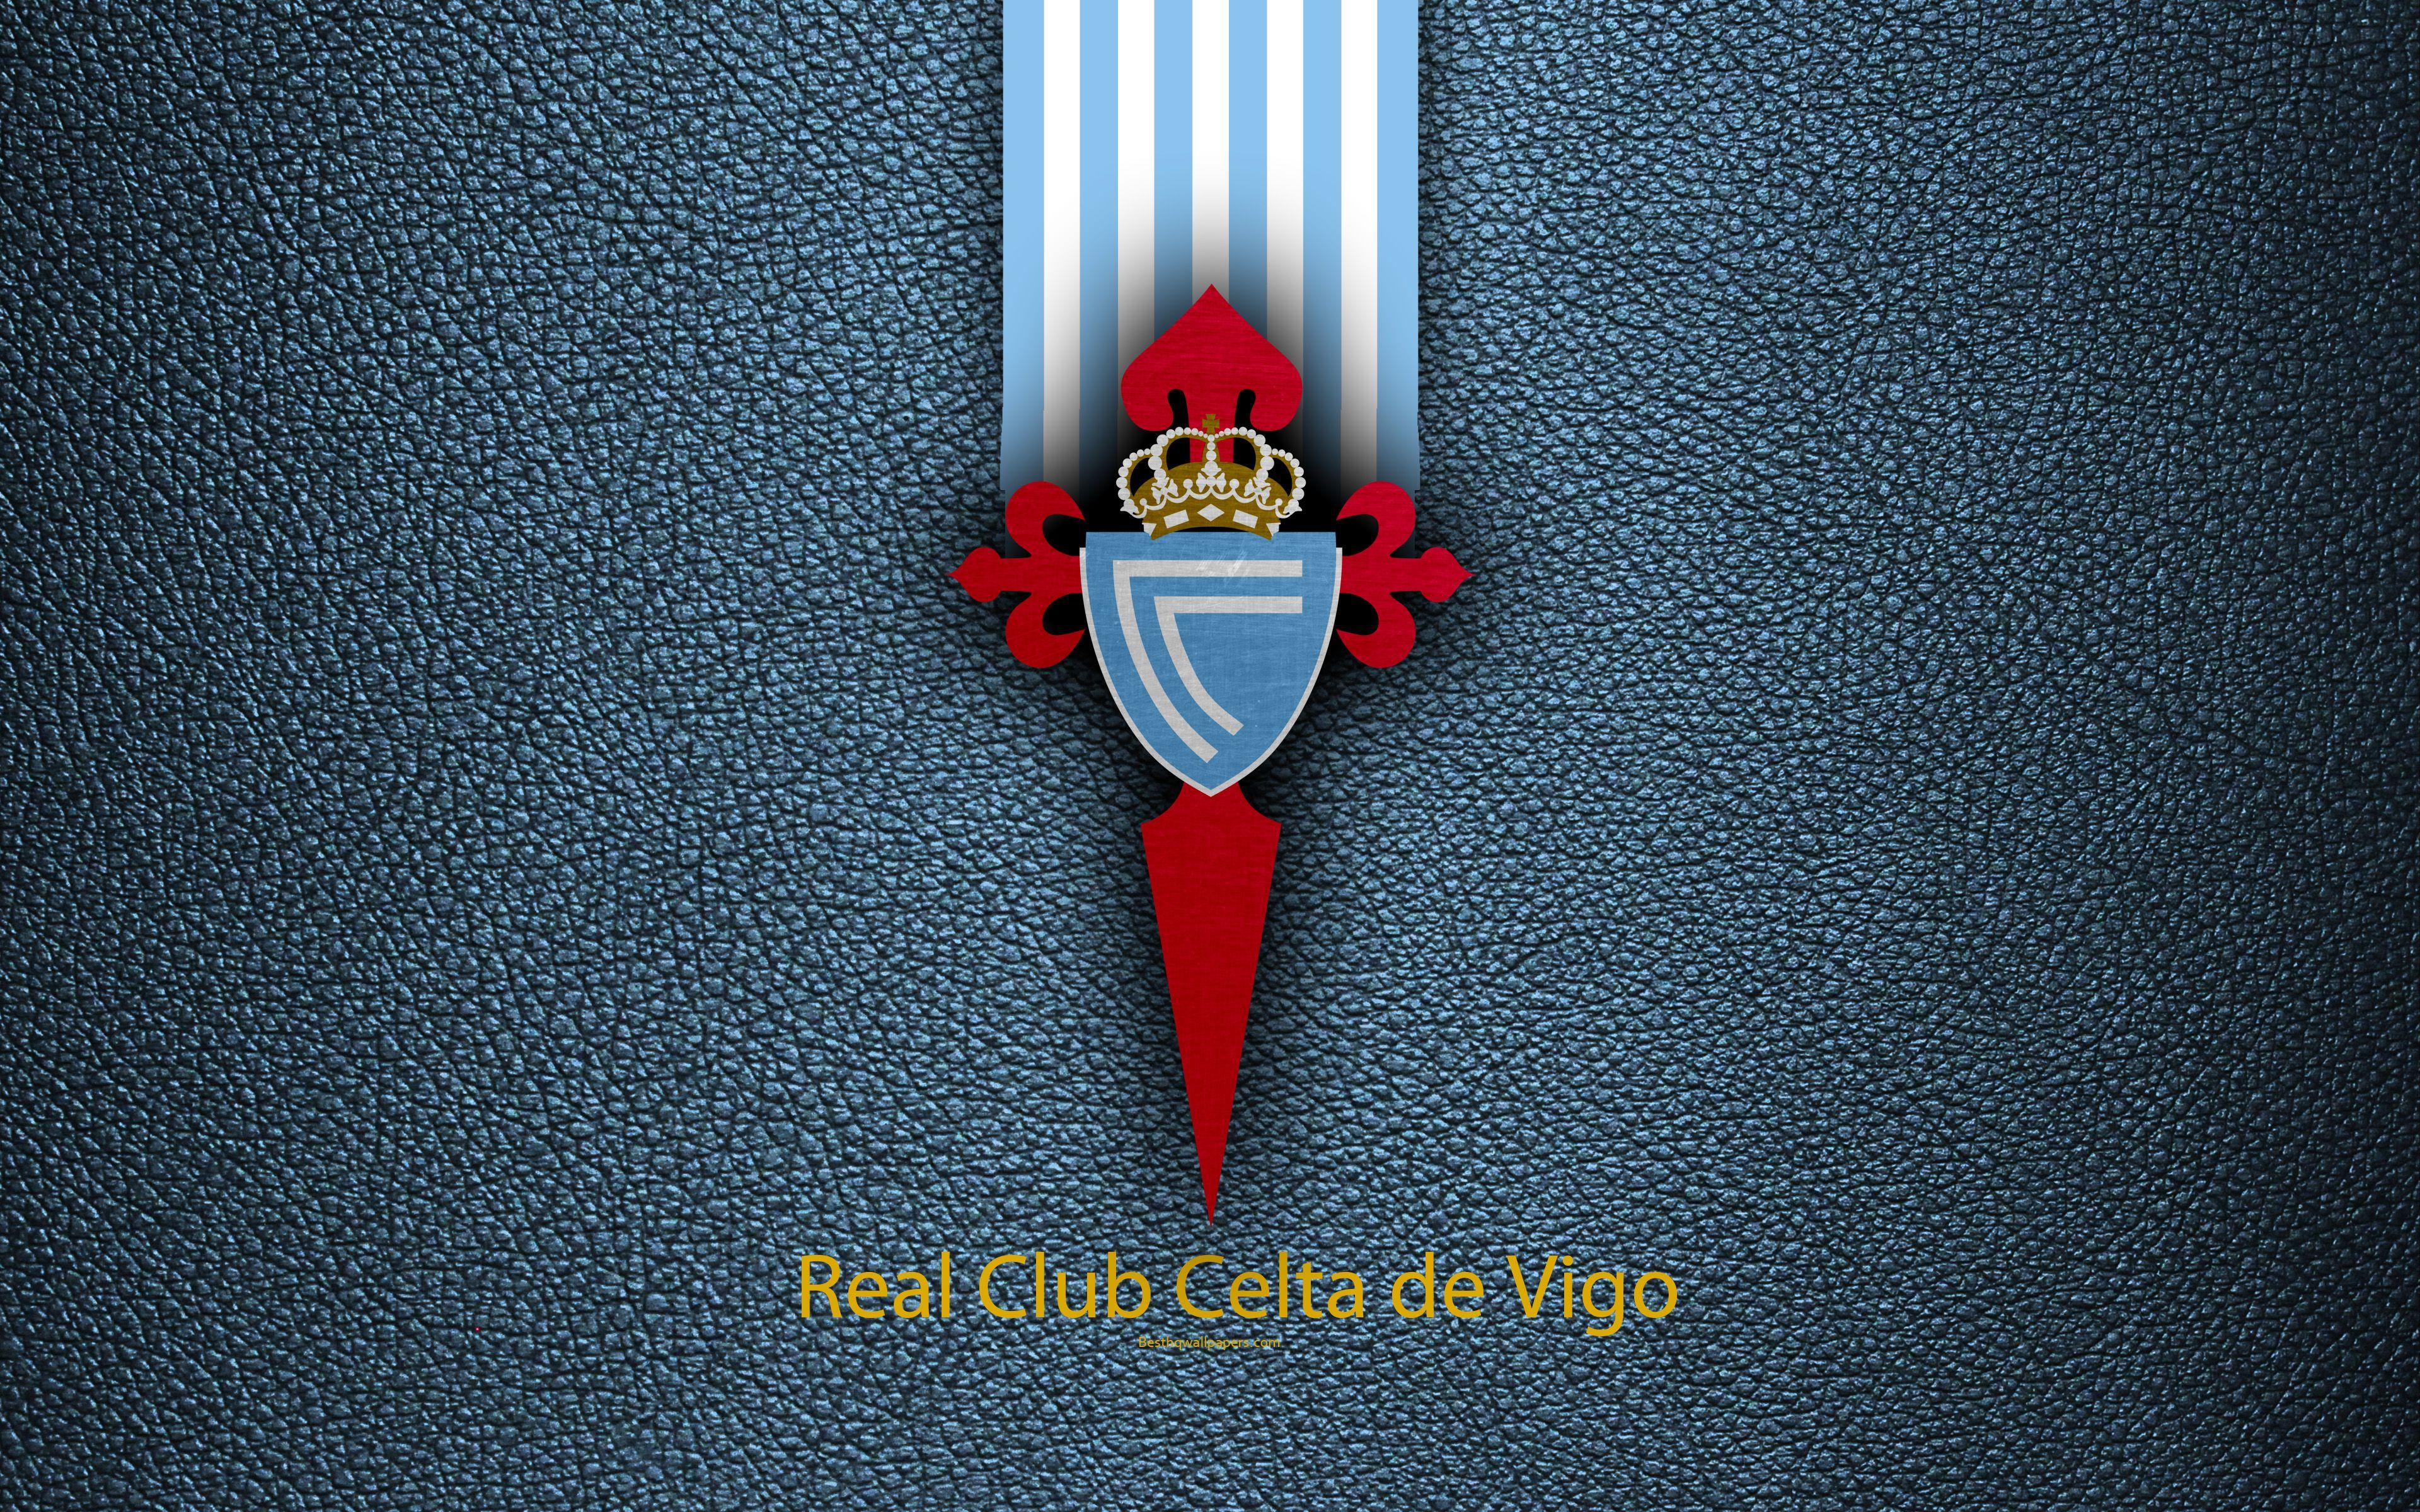 Download wallpaper Celta de Vigo FC, 4K, Spanish football club, La